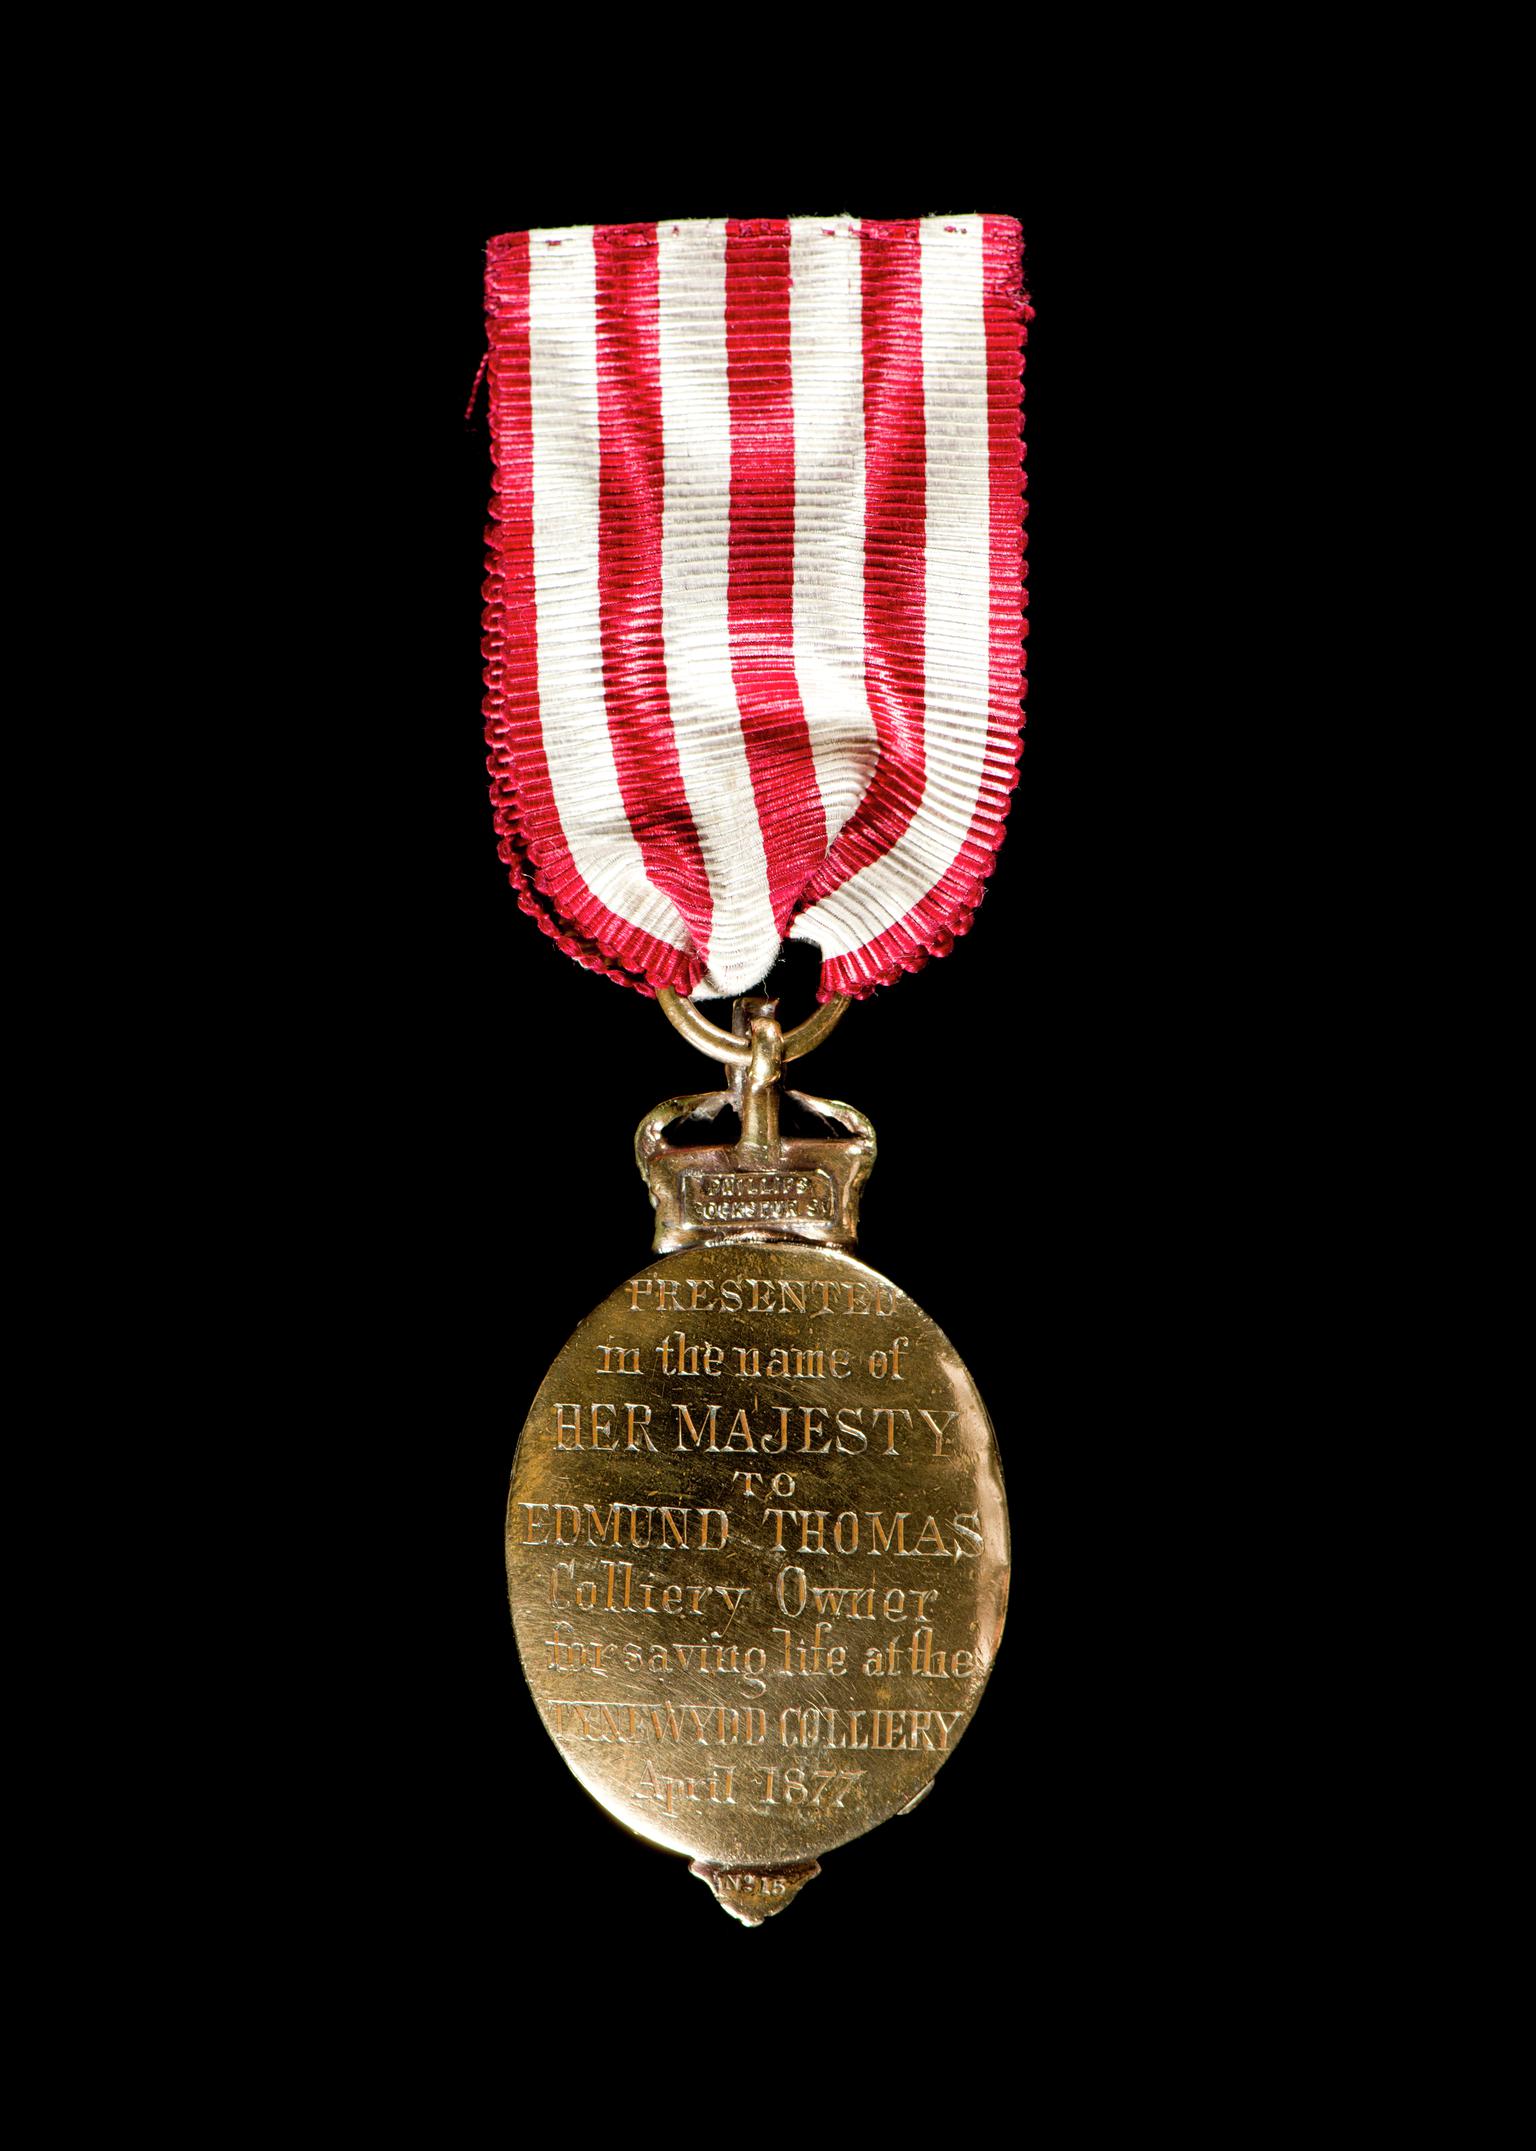 Albert Medal, bronze, presented to Edmund Thomas